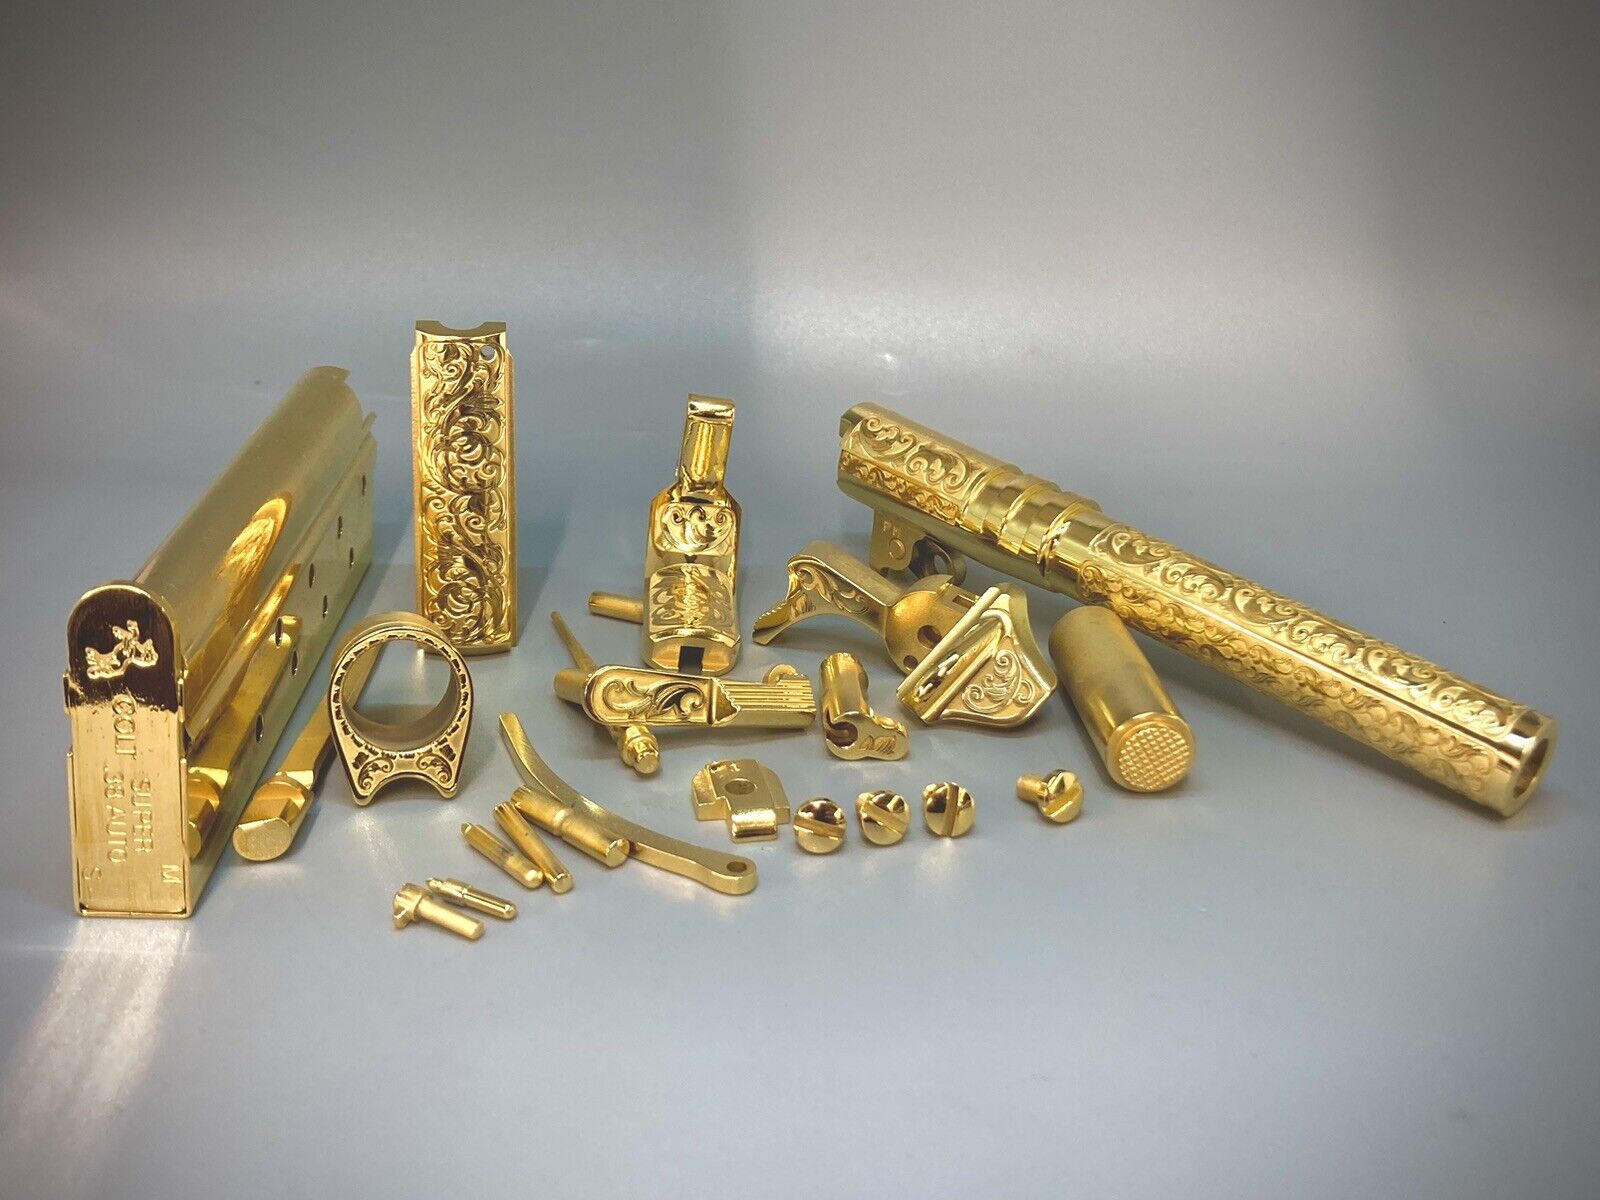 🔥SERVICE 1911 Parts 24k Gold, Engraving SEND IN YOUR PARTS❗️READ DESCRIPTION ❗️